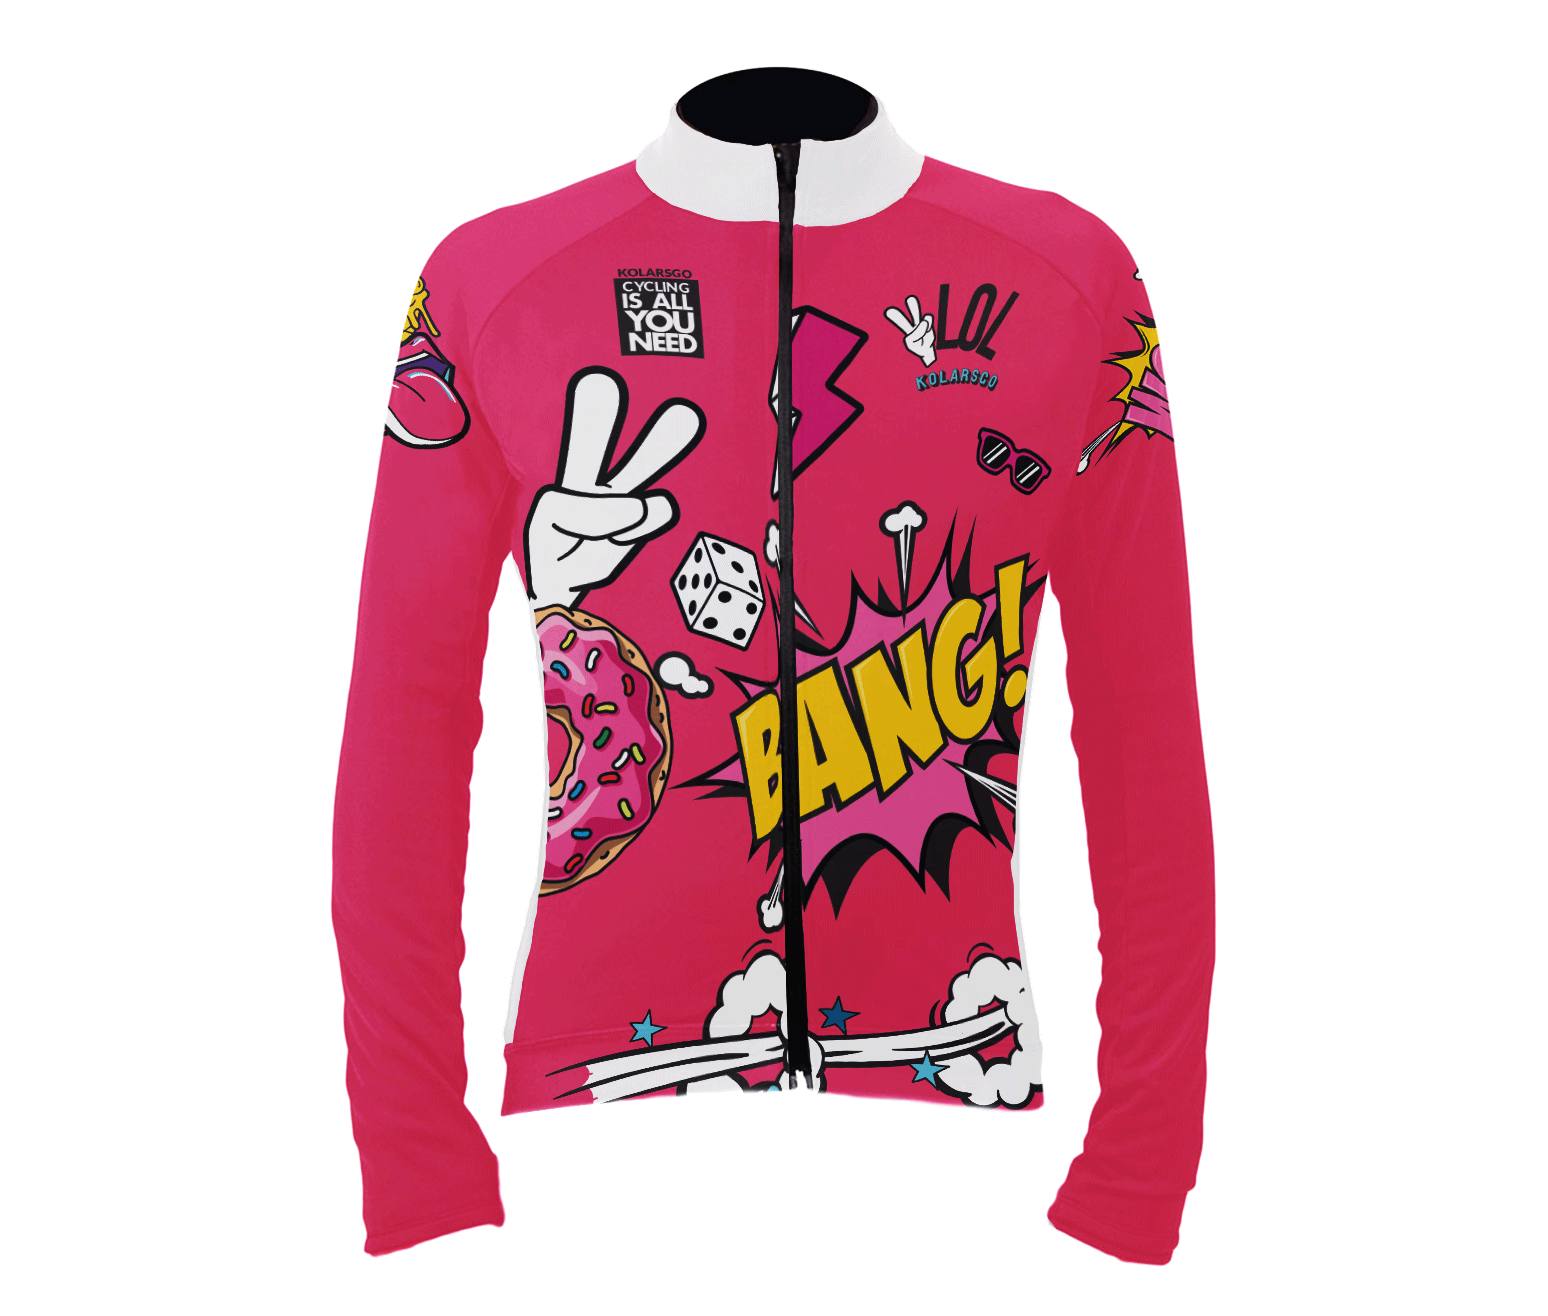 Cycling sweatshirt comics pink image 1